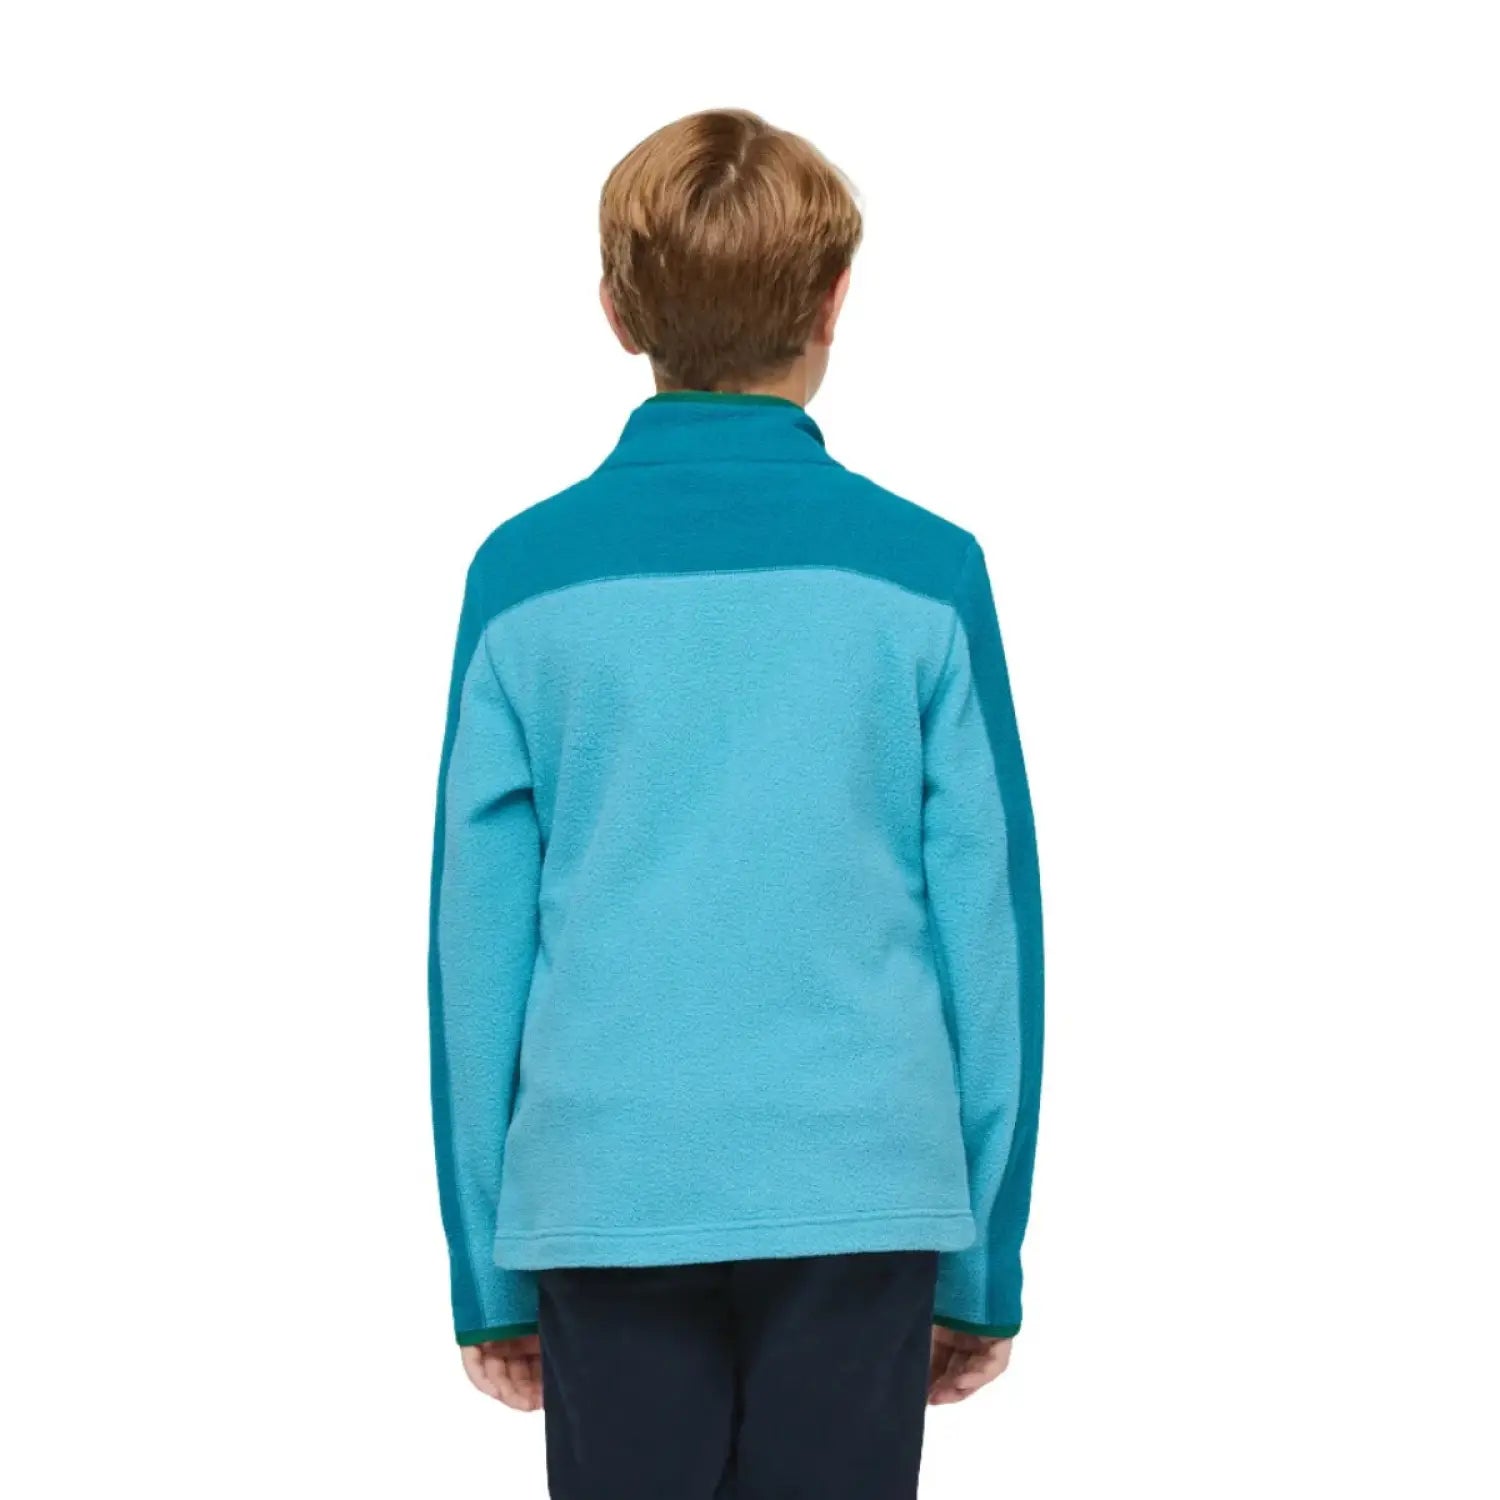 Cotopaxi K's Abrazo Half-Zip Fleece Jacket, Gulf Poolside, back view on model 